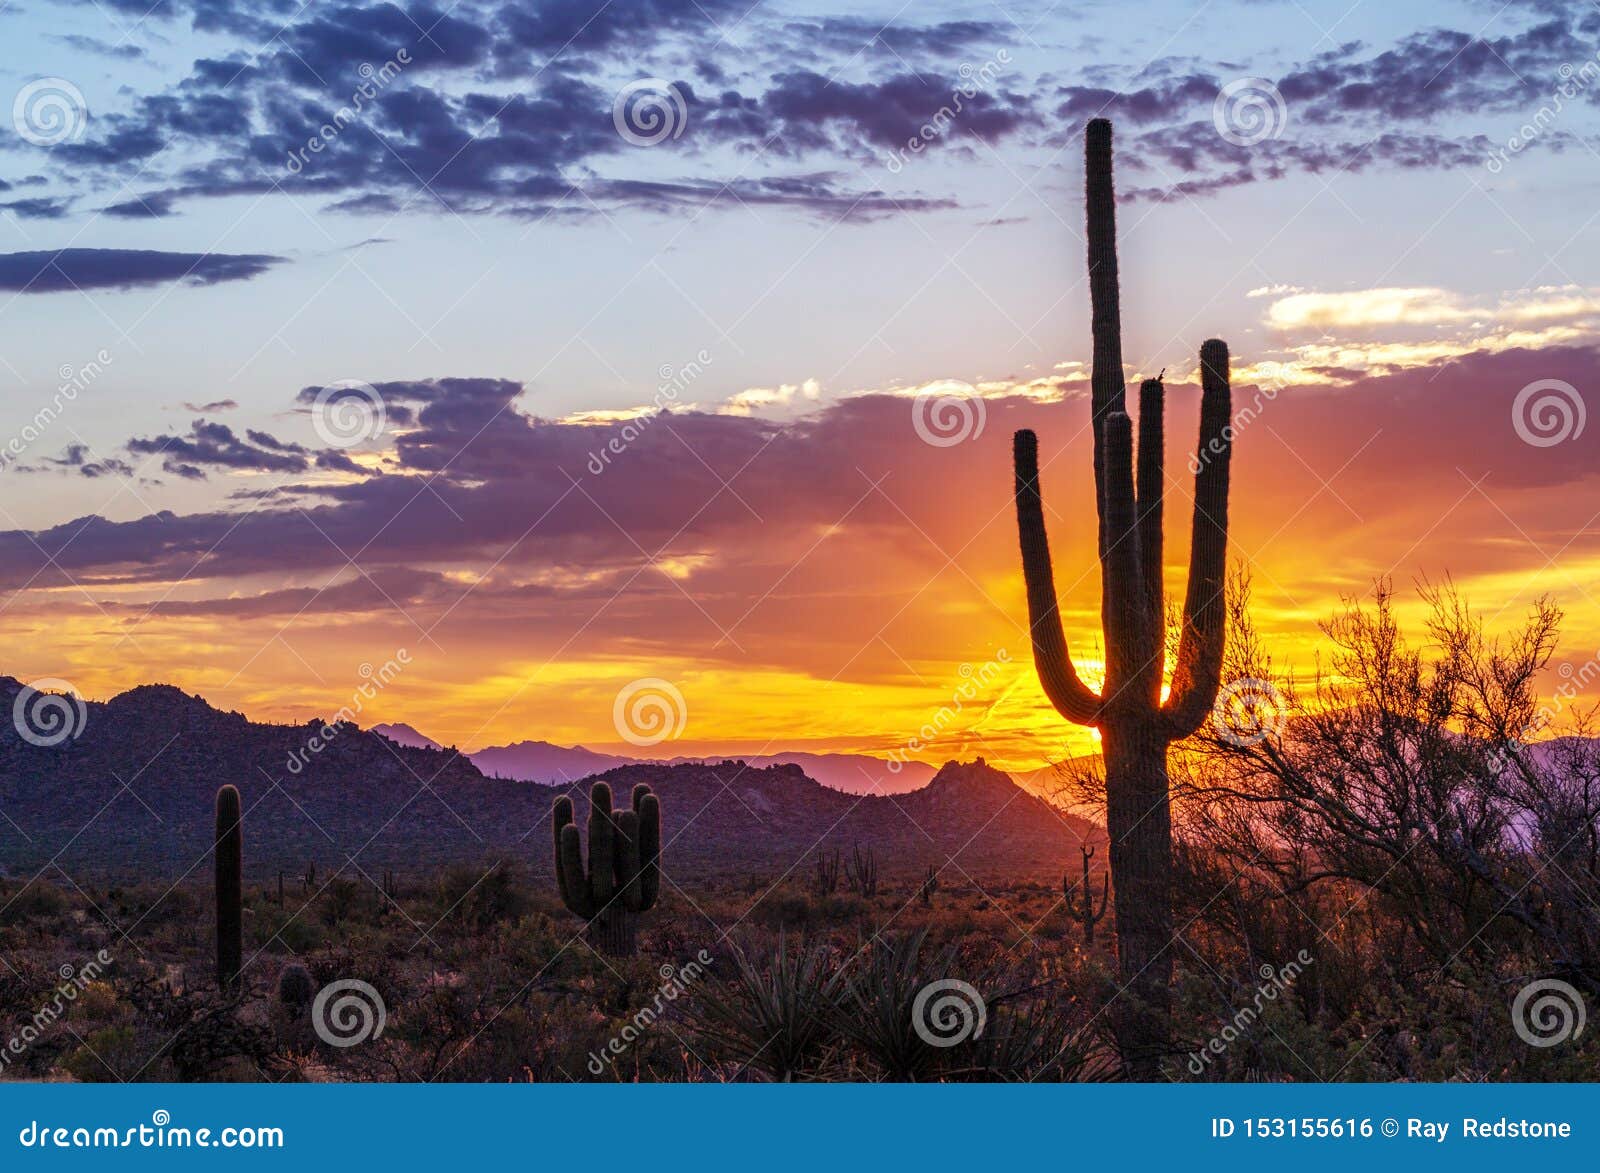 Vibrant Arizona Desert Sunrise with Cactus & Mountains in Background ...